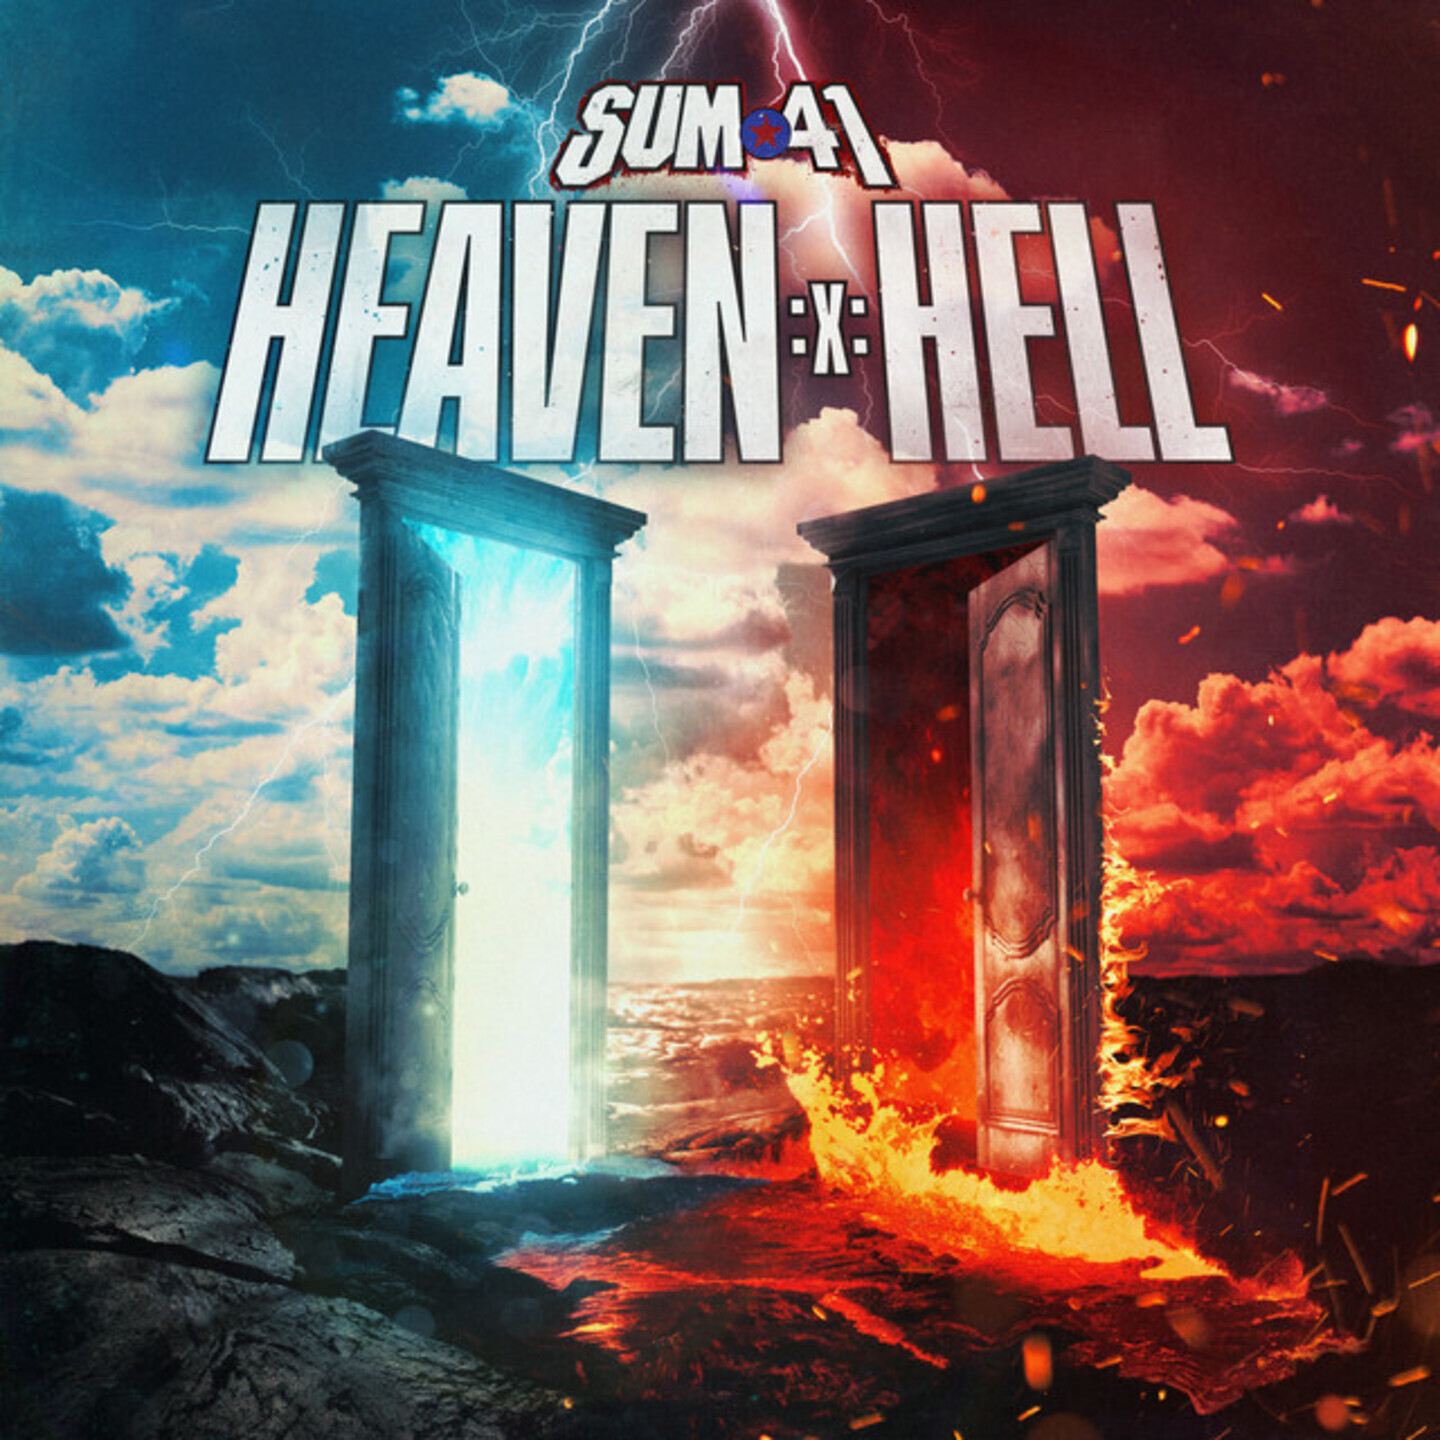 SUM 41 - Heaven :x: Hell 2xLP (Red & Black Quad With Blue Splatter vinyl)